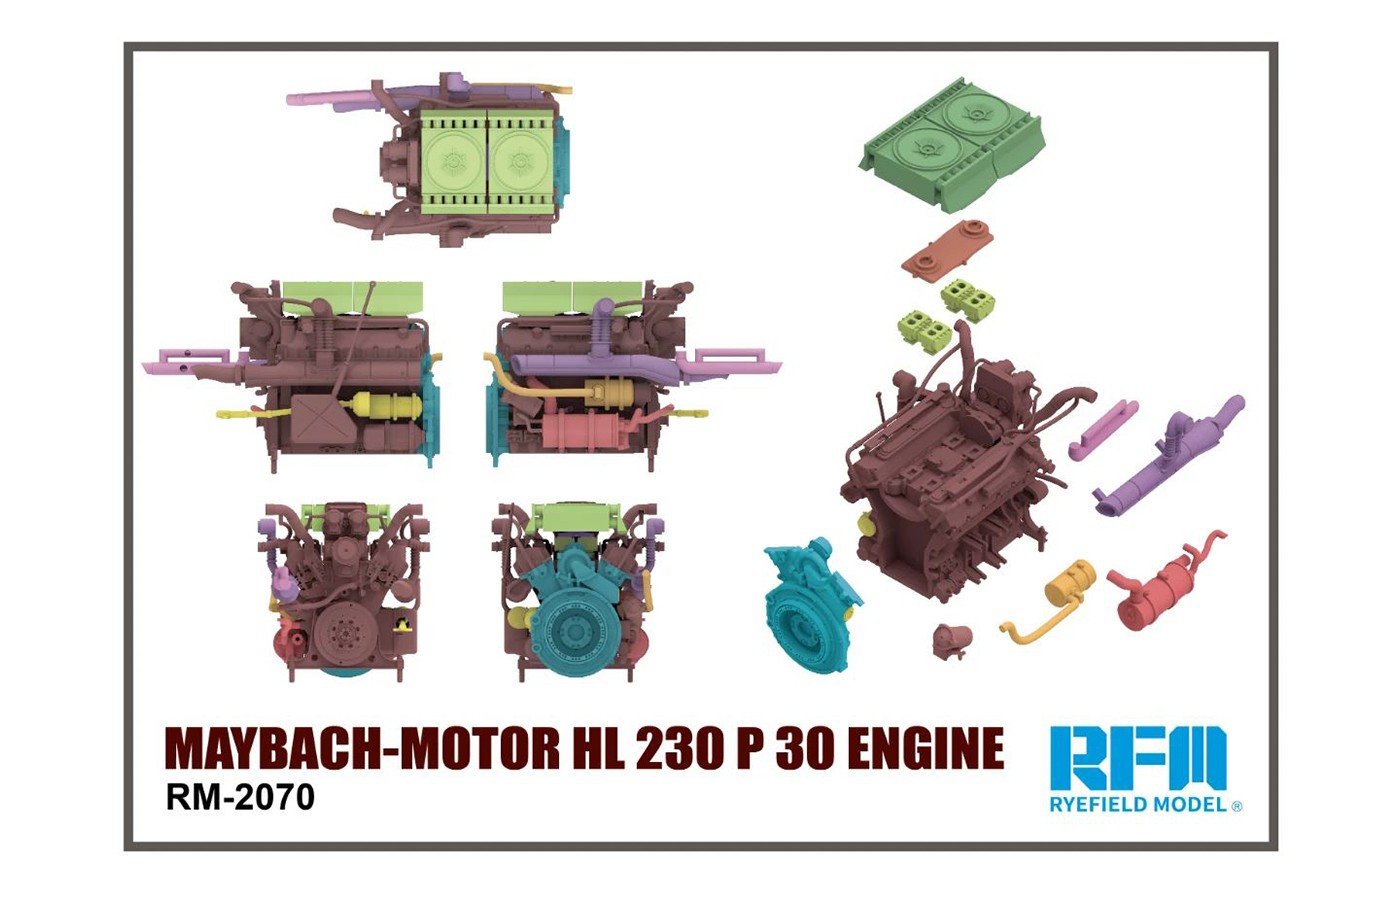 RM-2070 MAYBACH-MOTOR HL 230 P 30 ENGINE